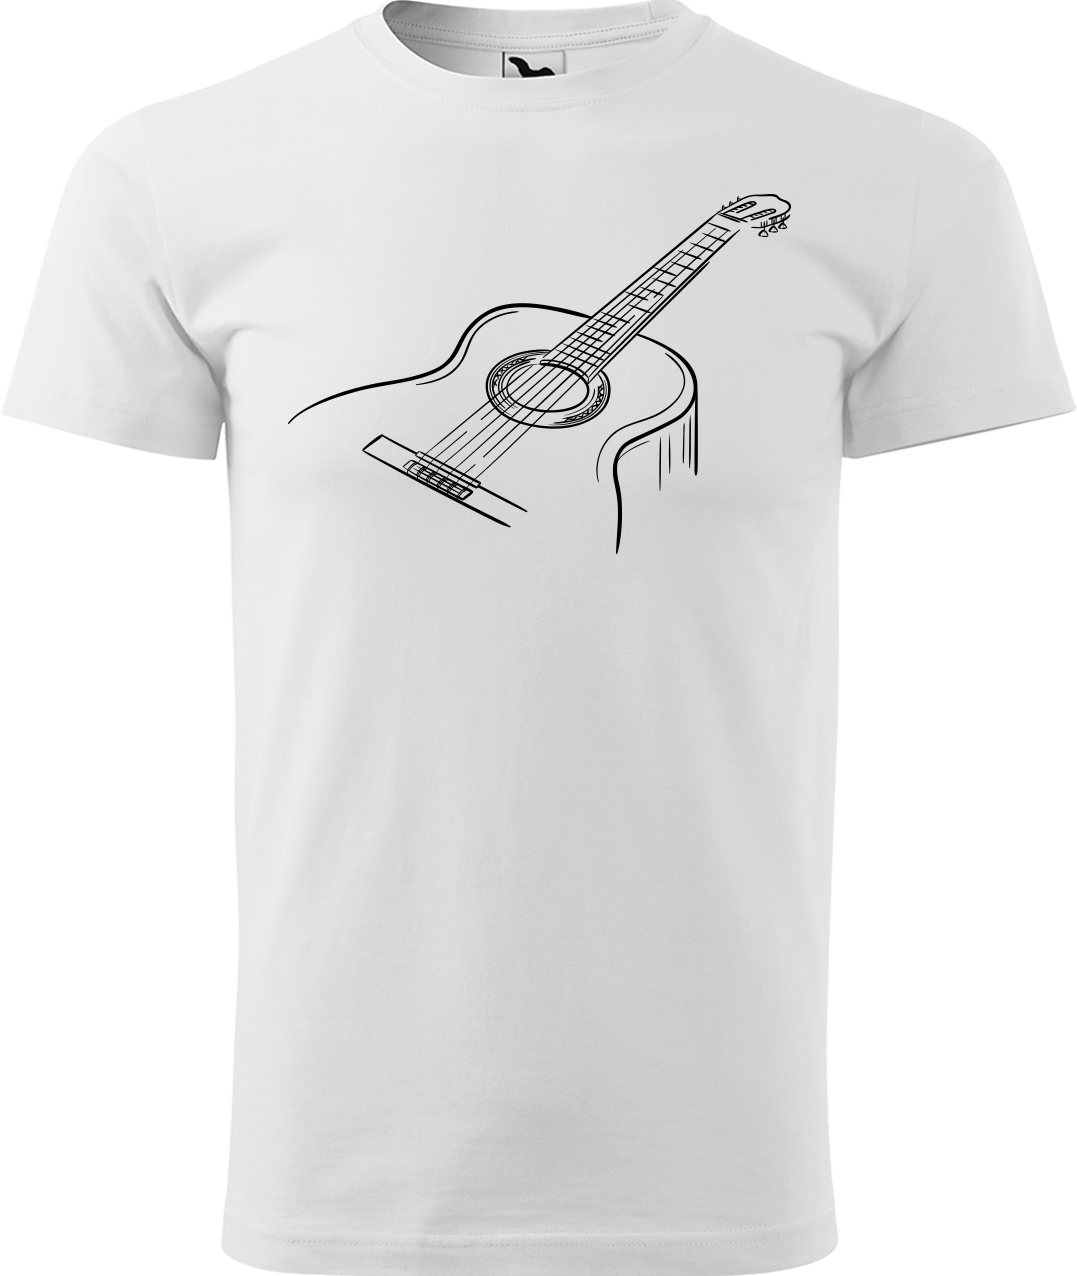 Pánské tričko s kytarou - Klasická kytara Velikost: 2XL, Barva: Bílá (00)